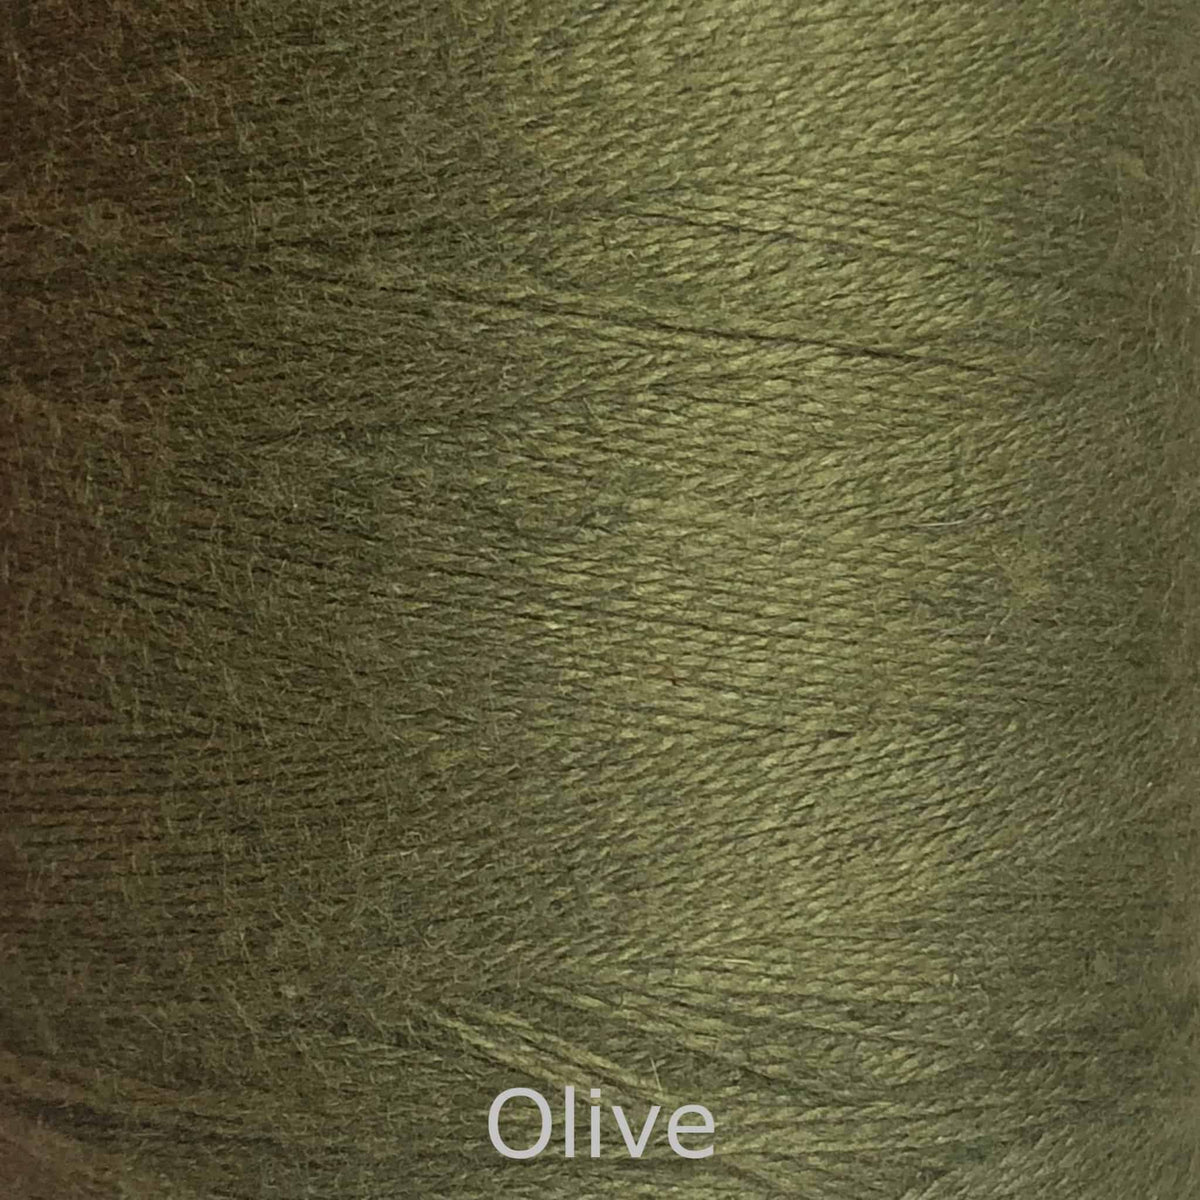 16/2 cotton weaving yarn olive